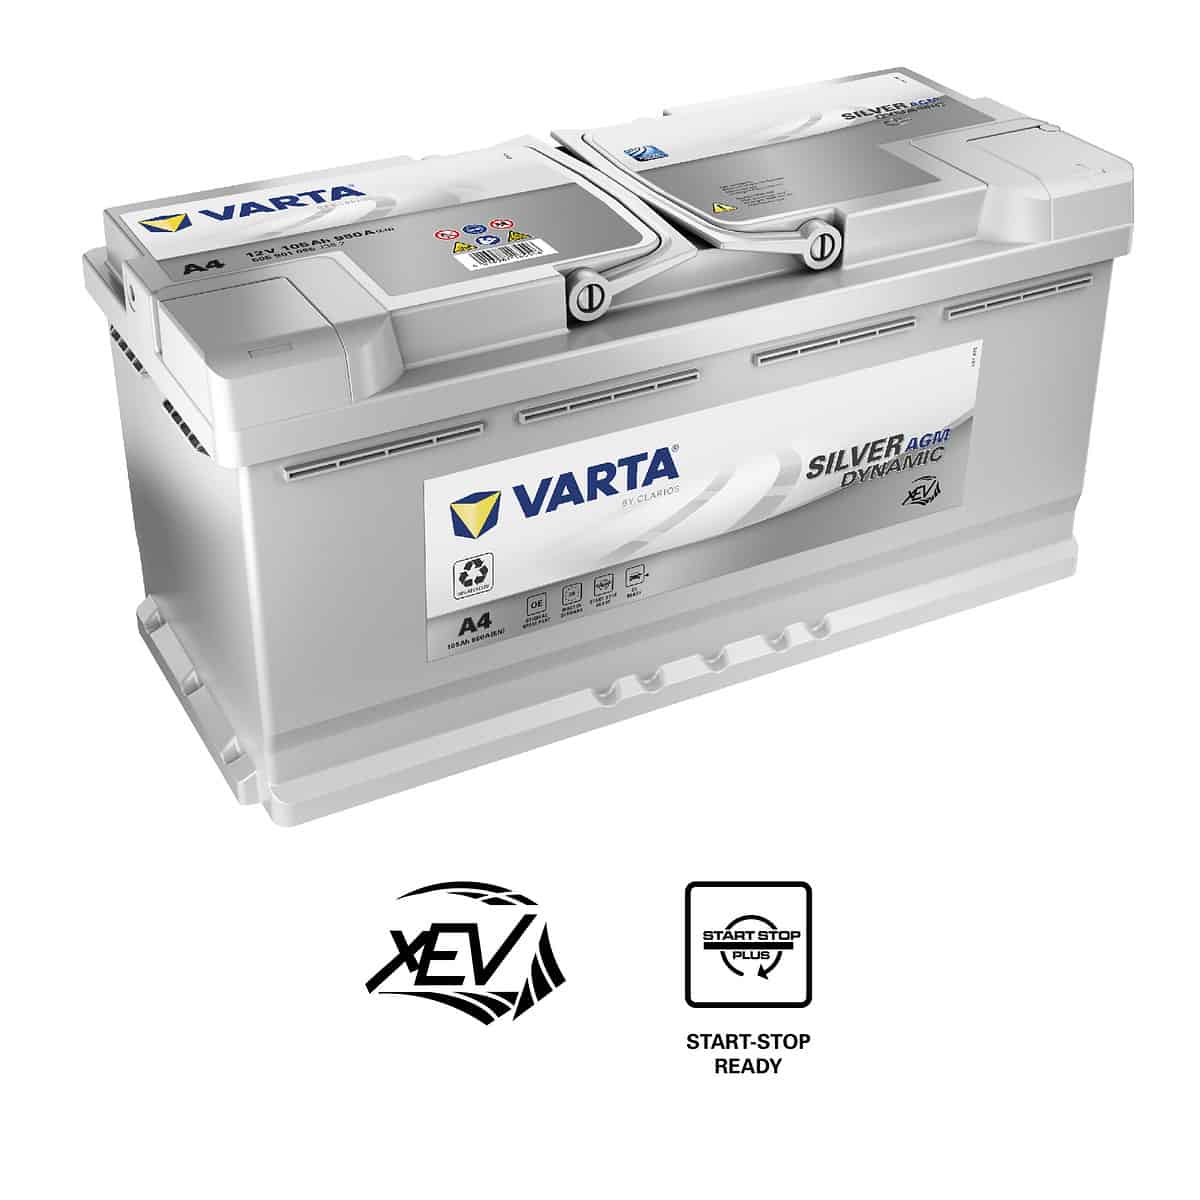 Акумулатор VARTA Silver Dynamic AGM 605 901 095 105AH 950A R+